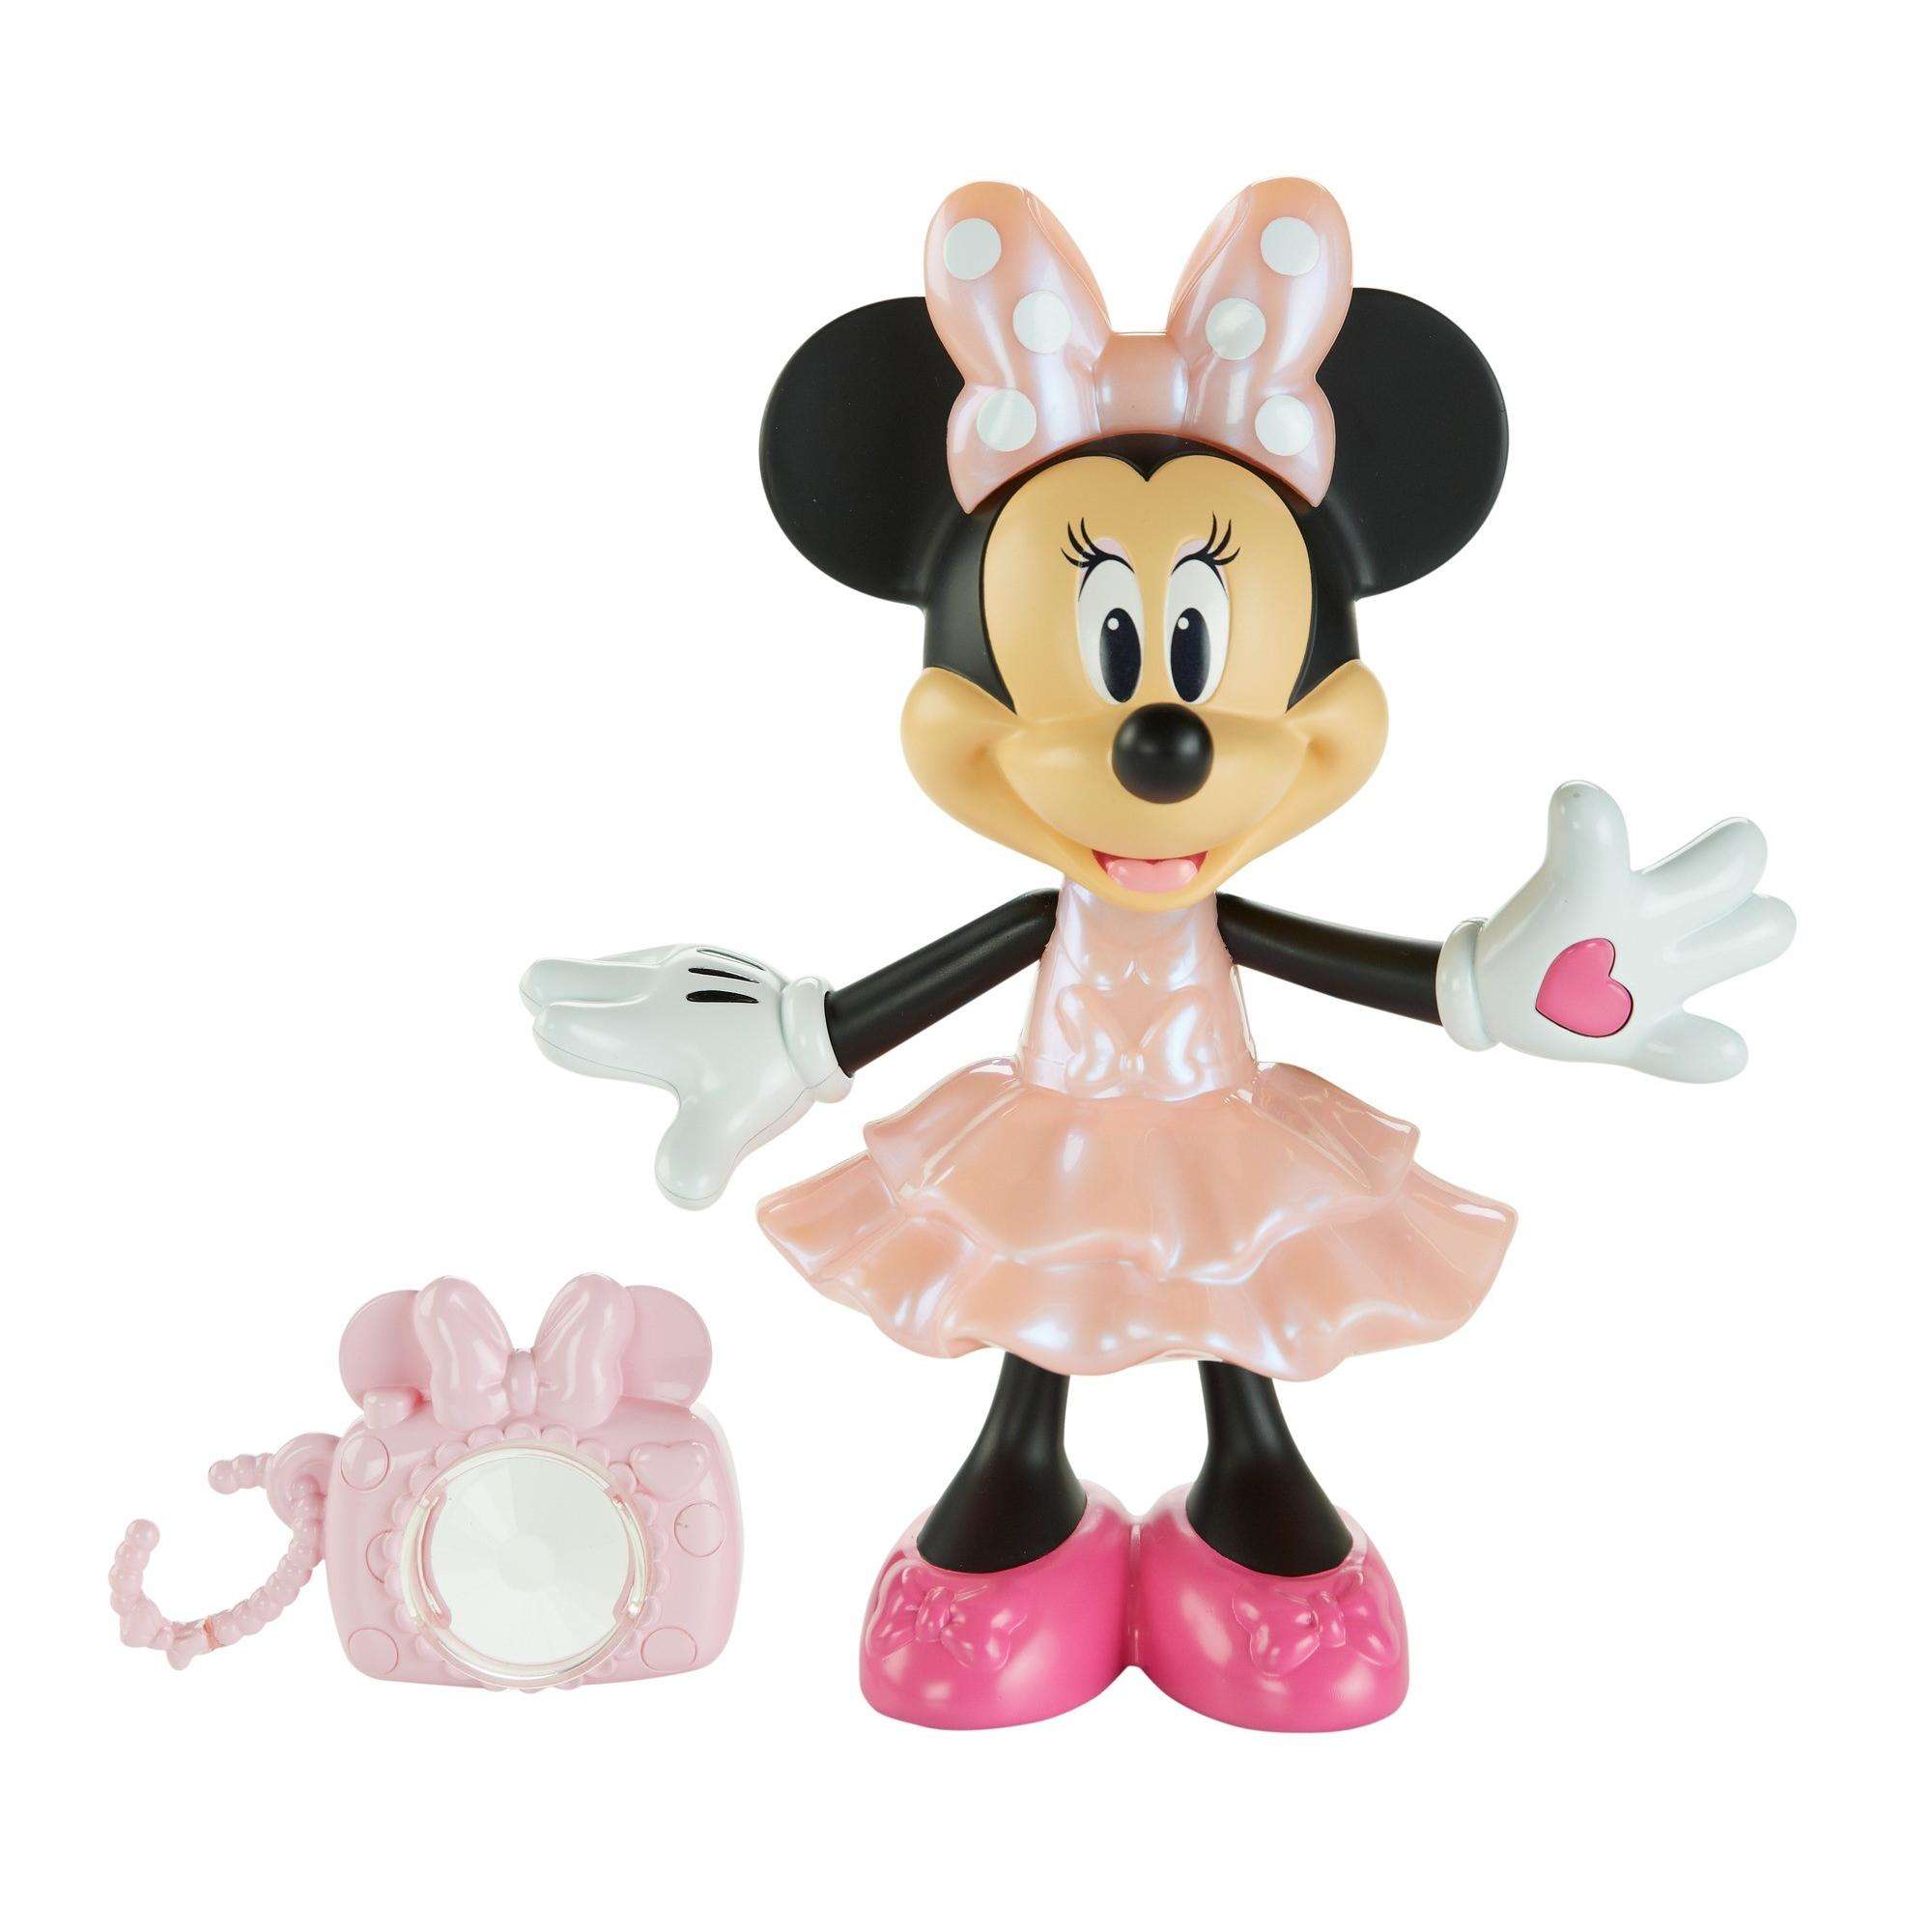 Disney Minnie Mouse Rainbow Dazzle Minnie - image 1 of 12